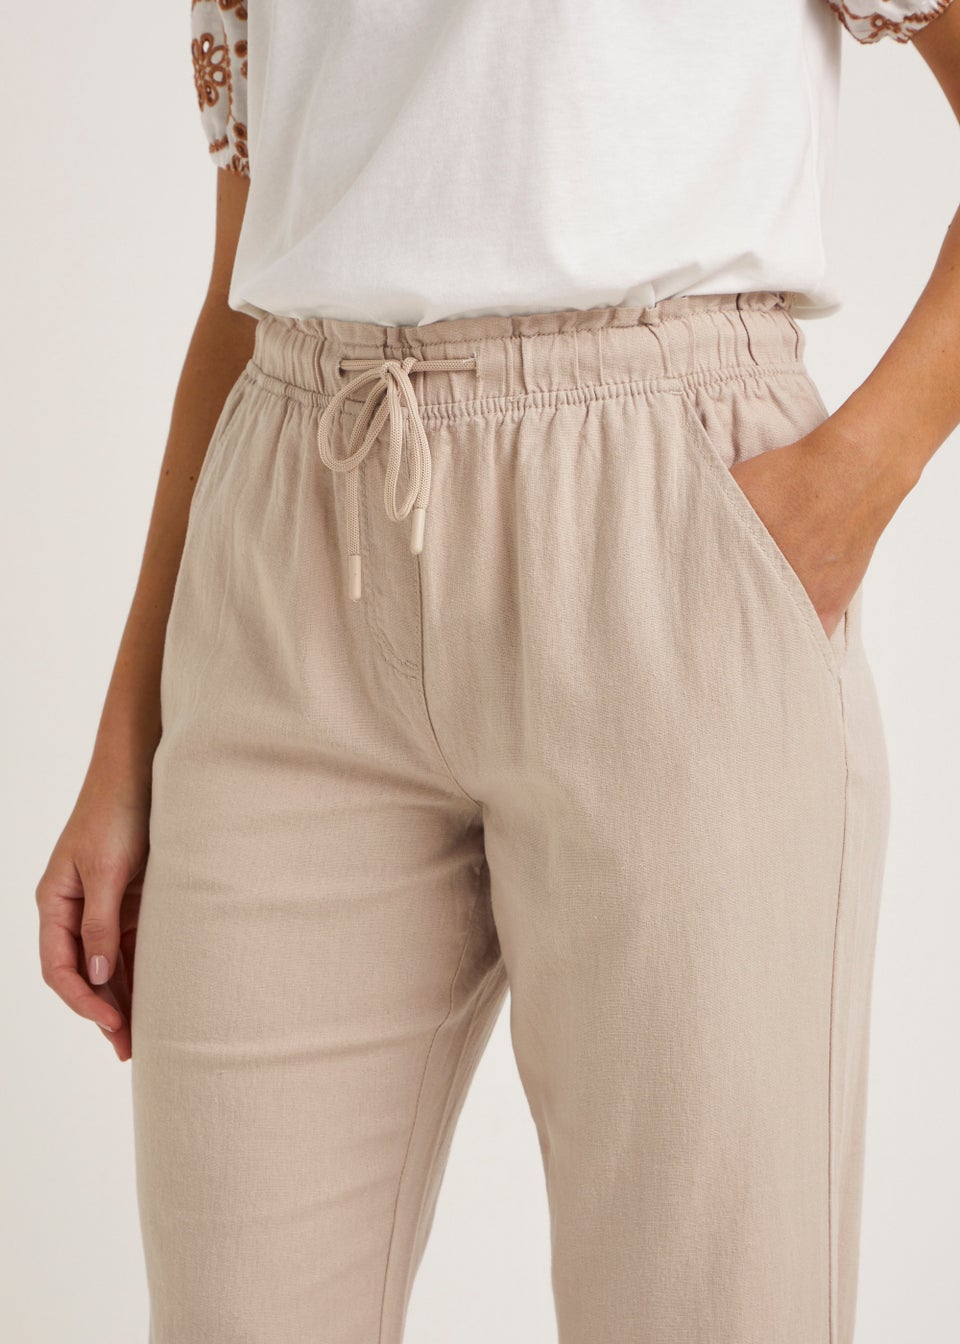 Matalan Ladies Linen Trousers on Sale, SAVE 31% - motorhomevoyager.co.uk